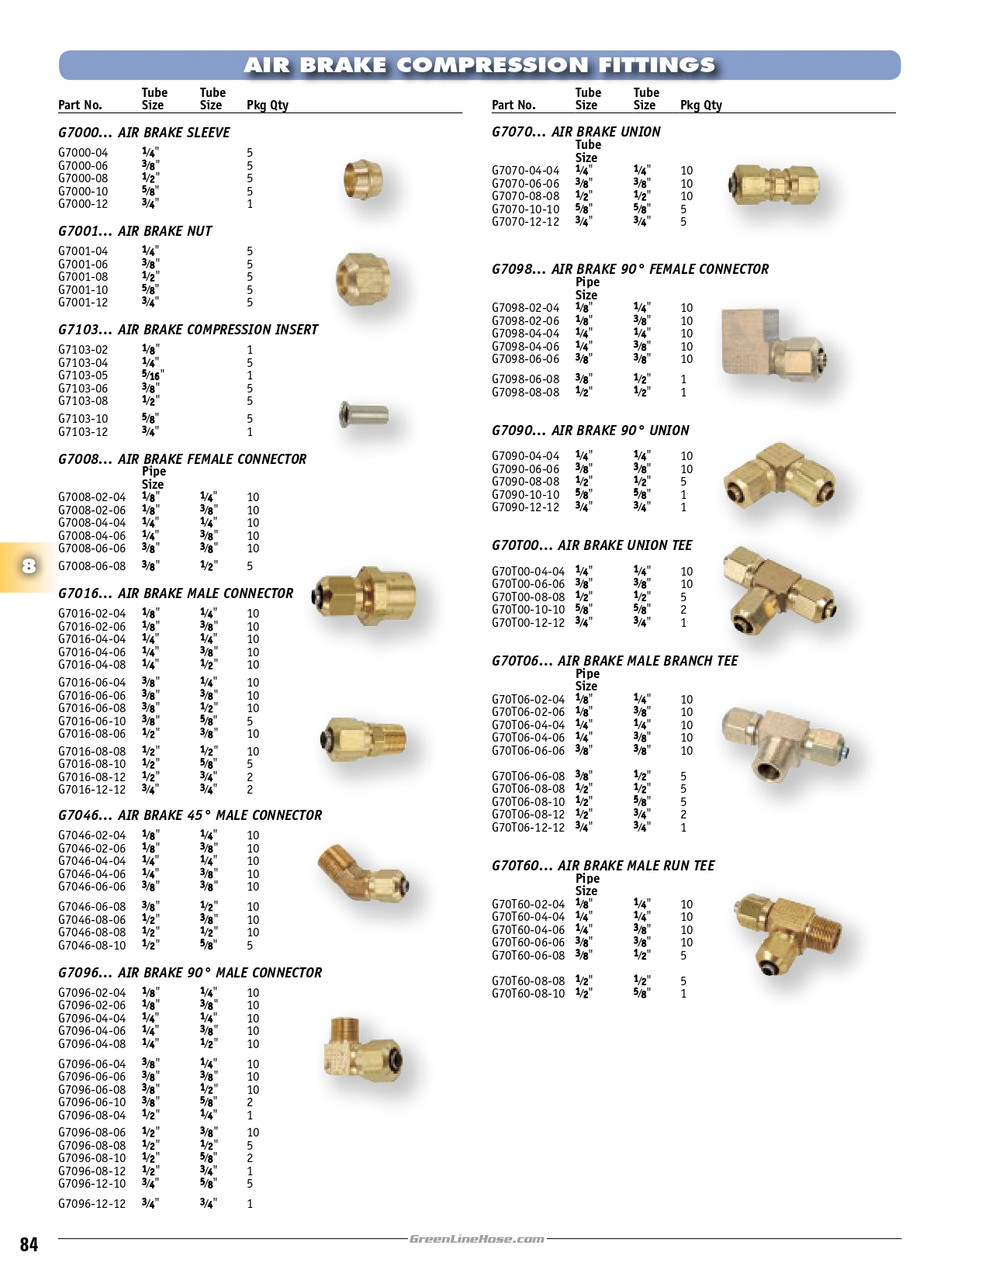 1/2 x 1/2 x 1/2" Brass DOT Male NPT - Compression - Compression Tee   G70T60-08-08